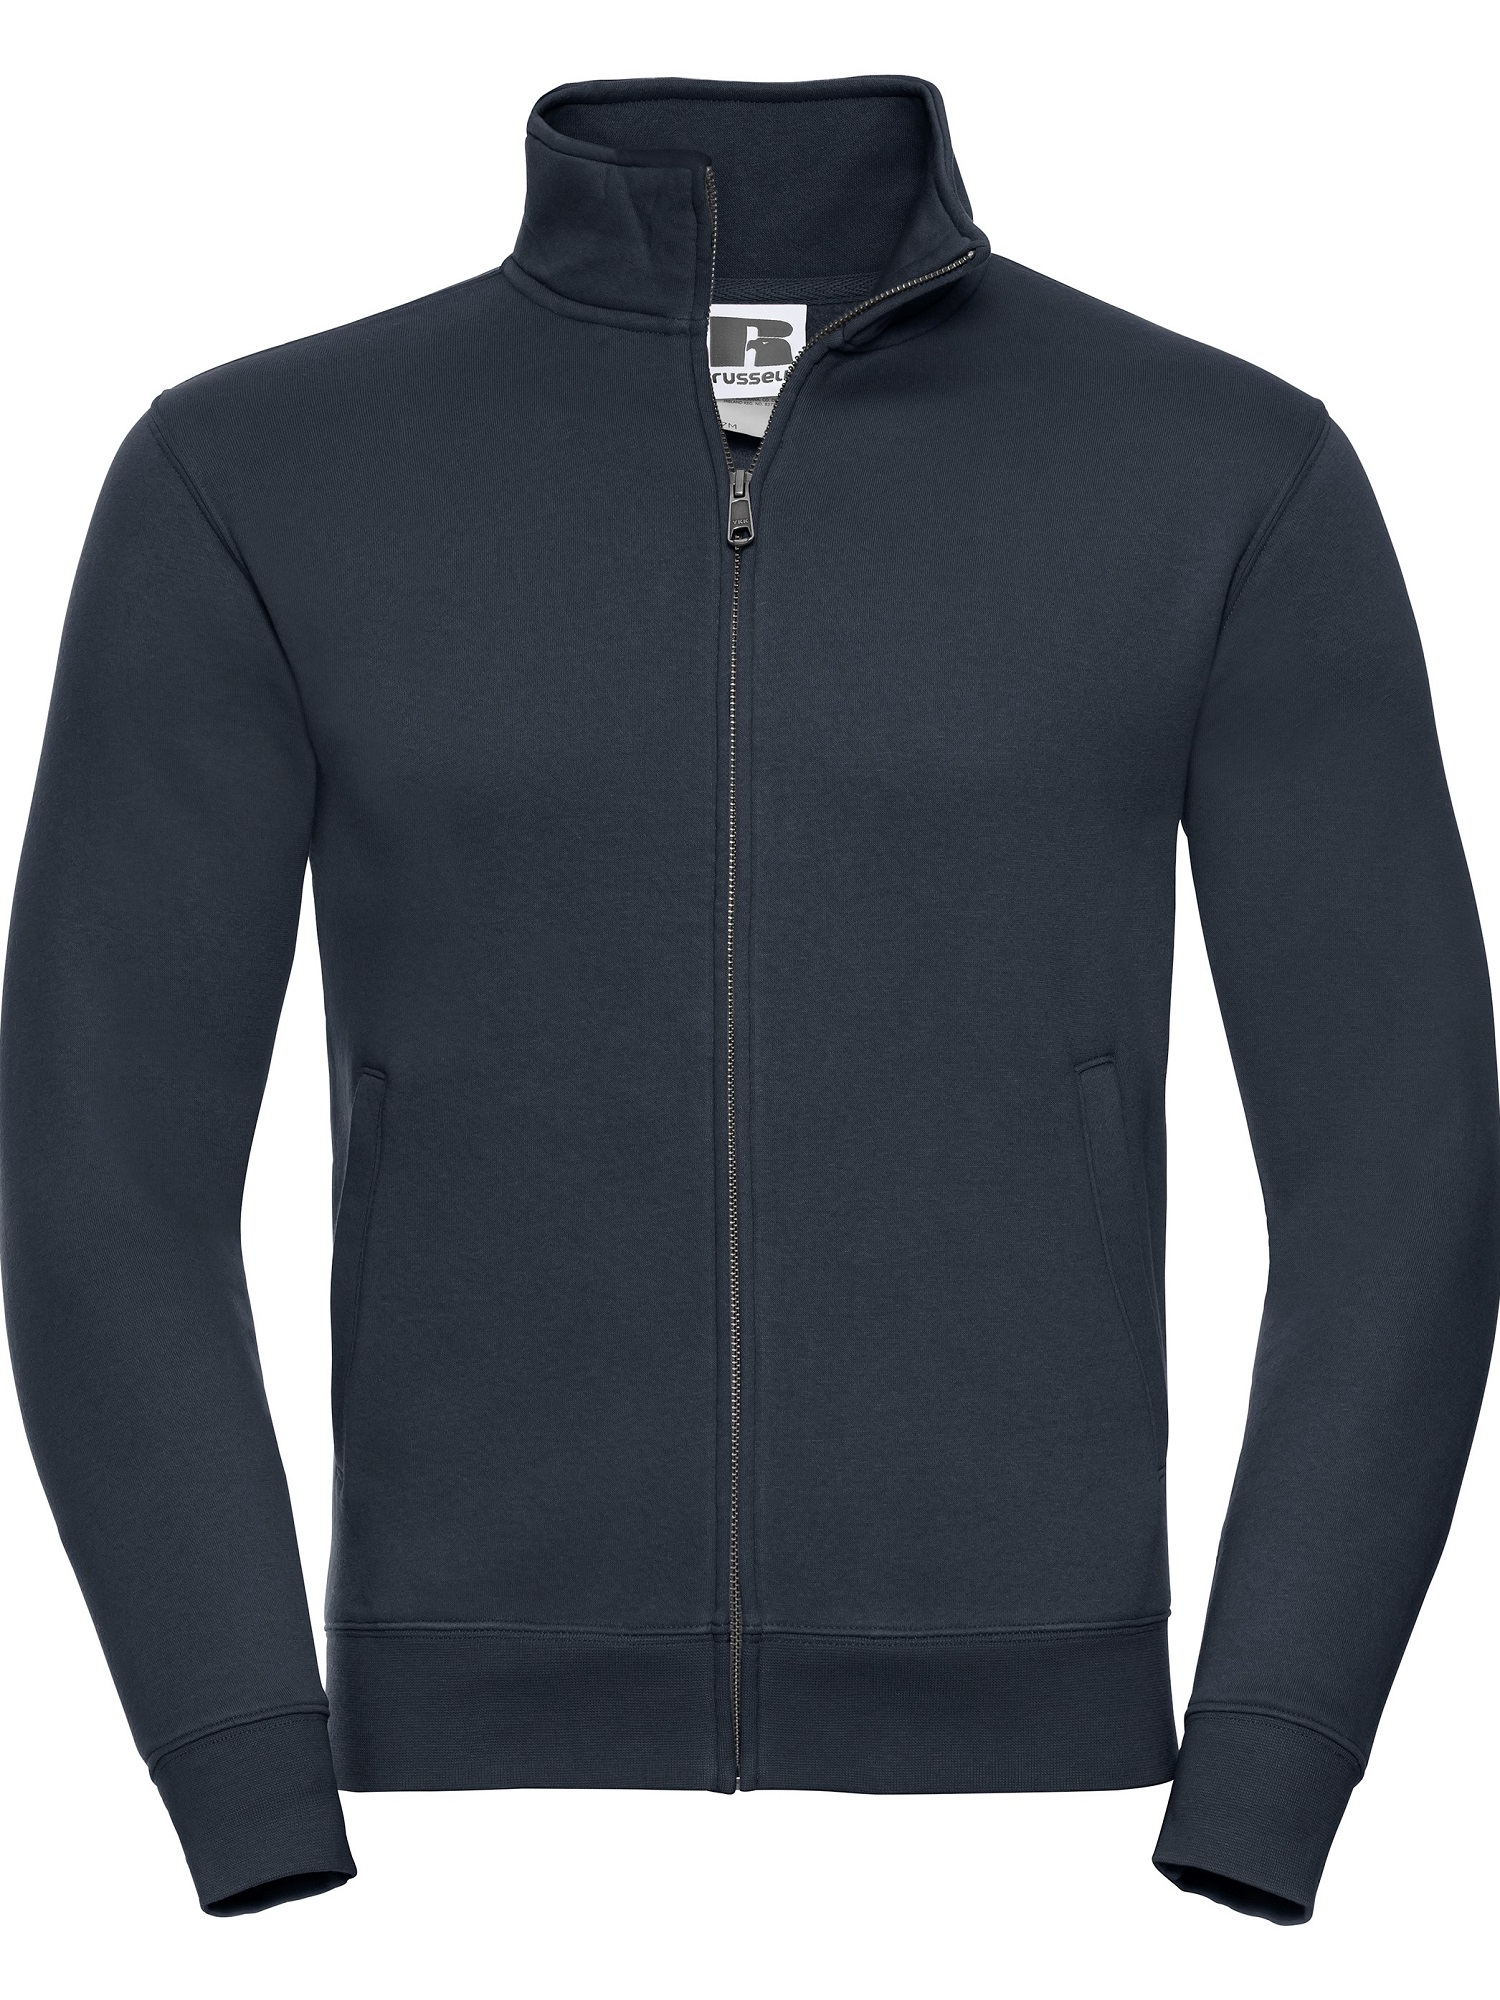 Men's Zip Up Sweatshirt - Authentic R267M 80% Plain Ring-Spun Cotton 20% Polyester (Three-Layer Fabric) 280g